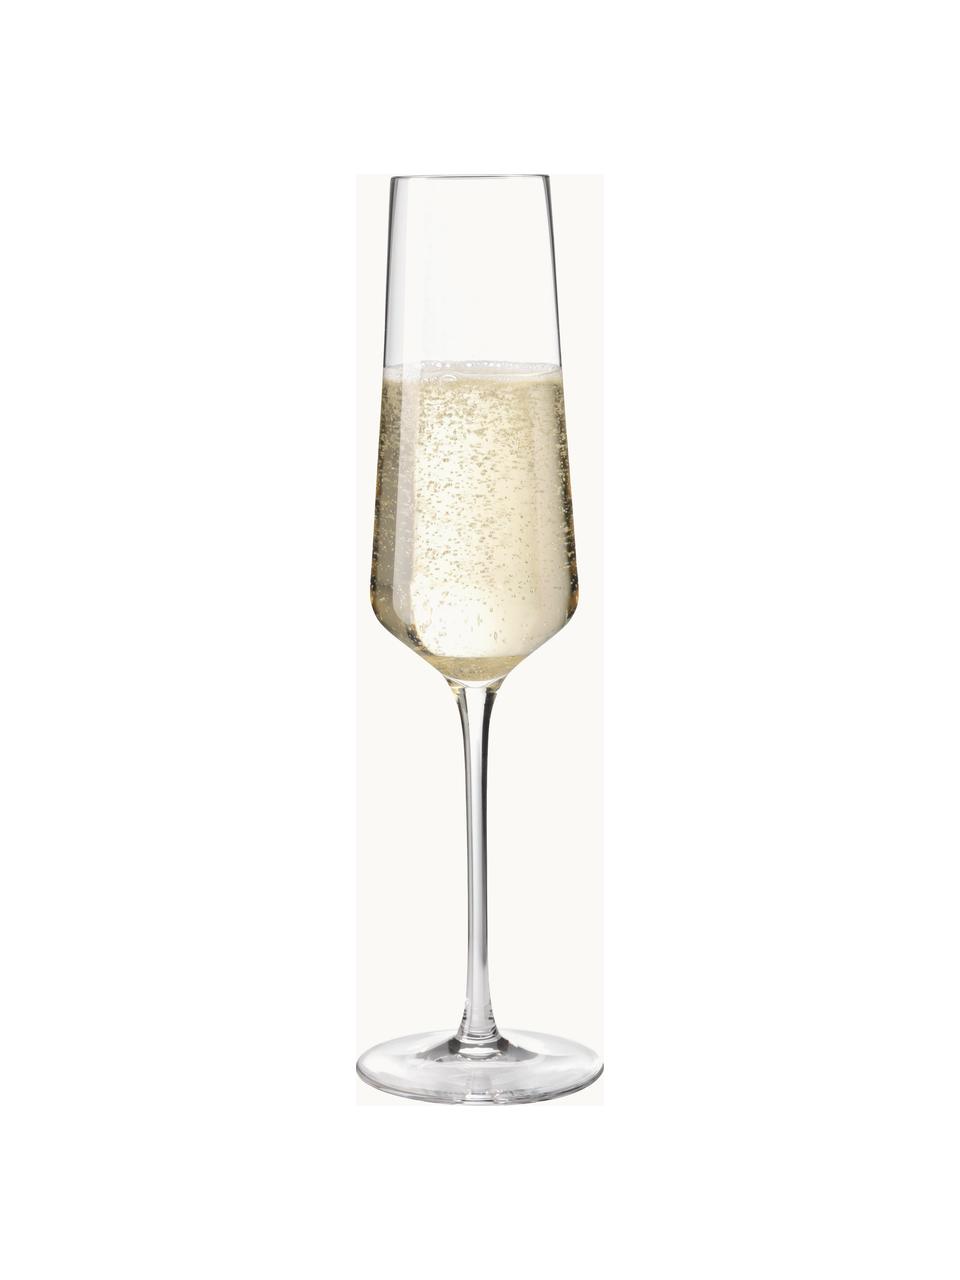 Champagneglas Puccini, 6 stuks, Teqton® glas, Transparant, Ø 7 x H 26 cm, 280 ml